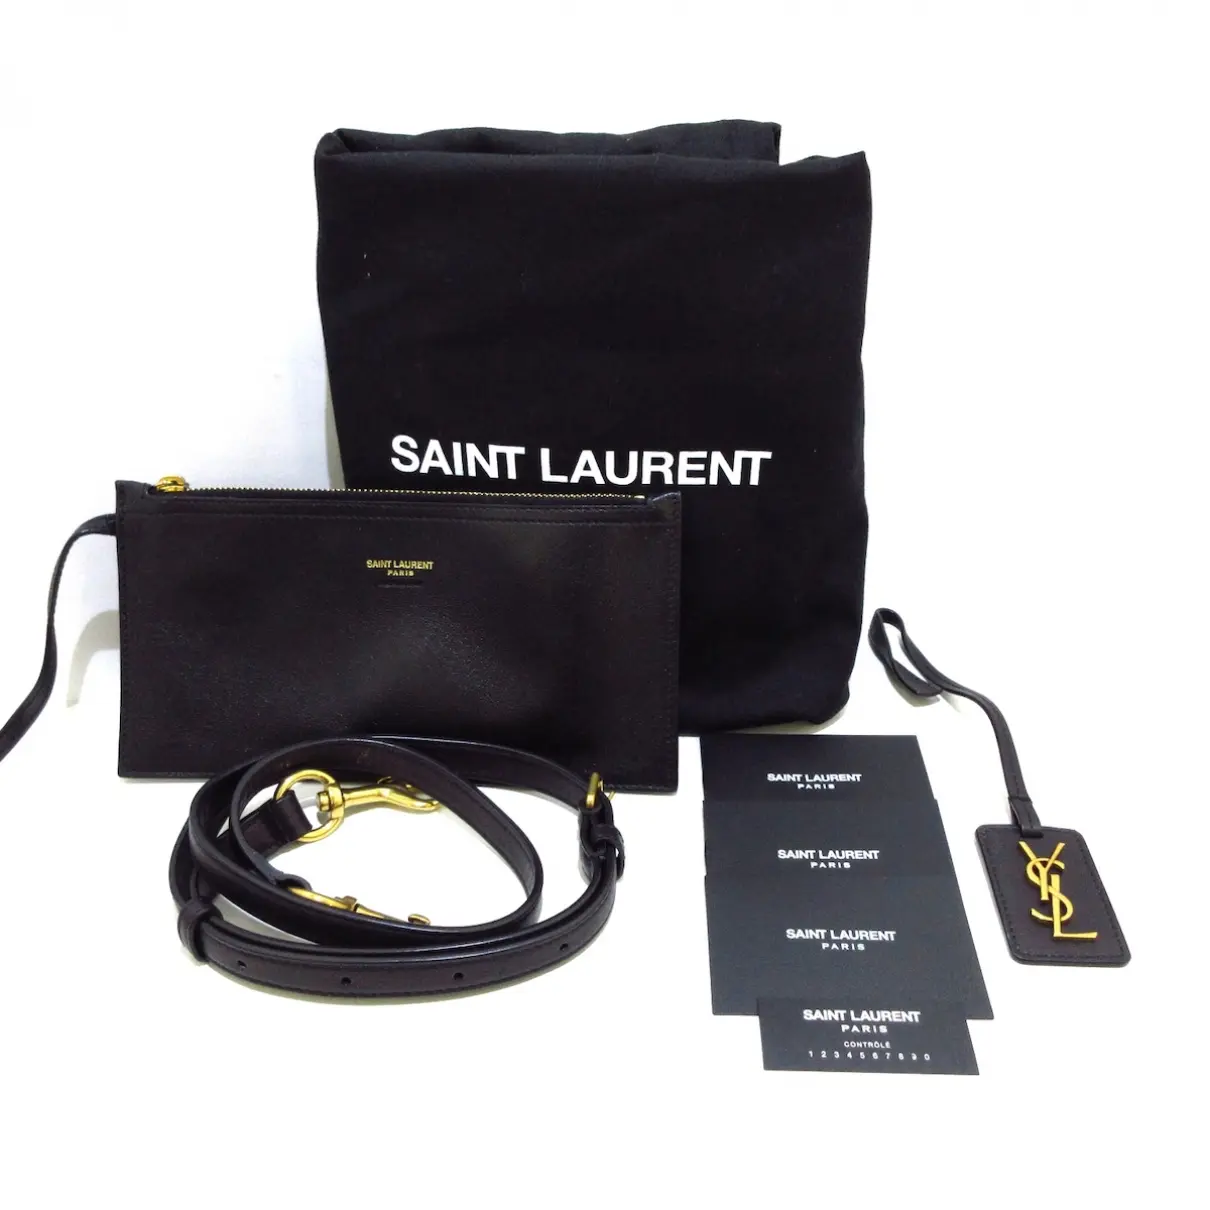 Buy Saint Laurent Leather tote online